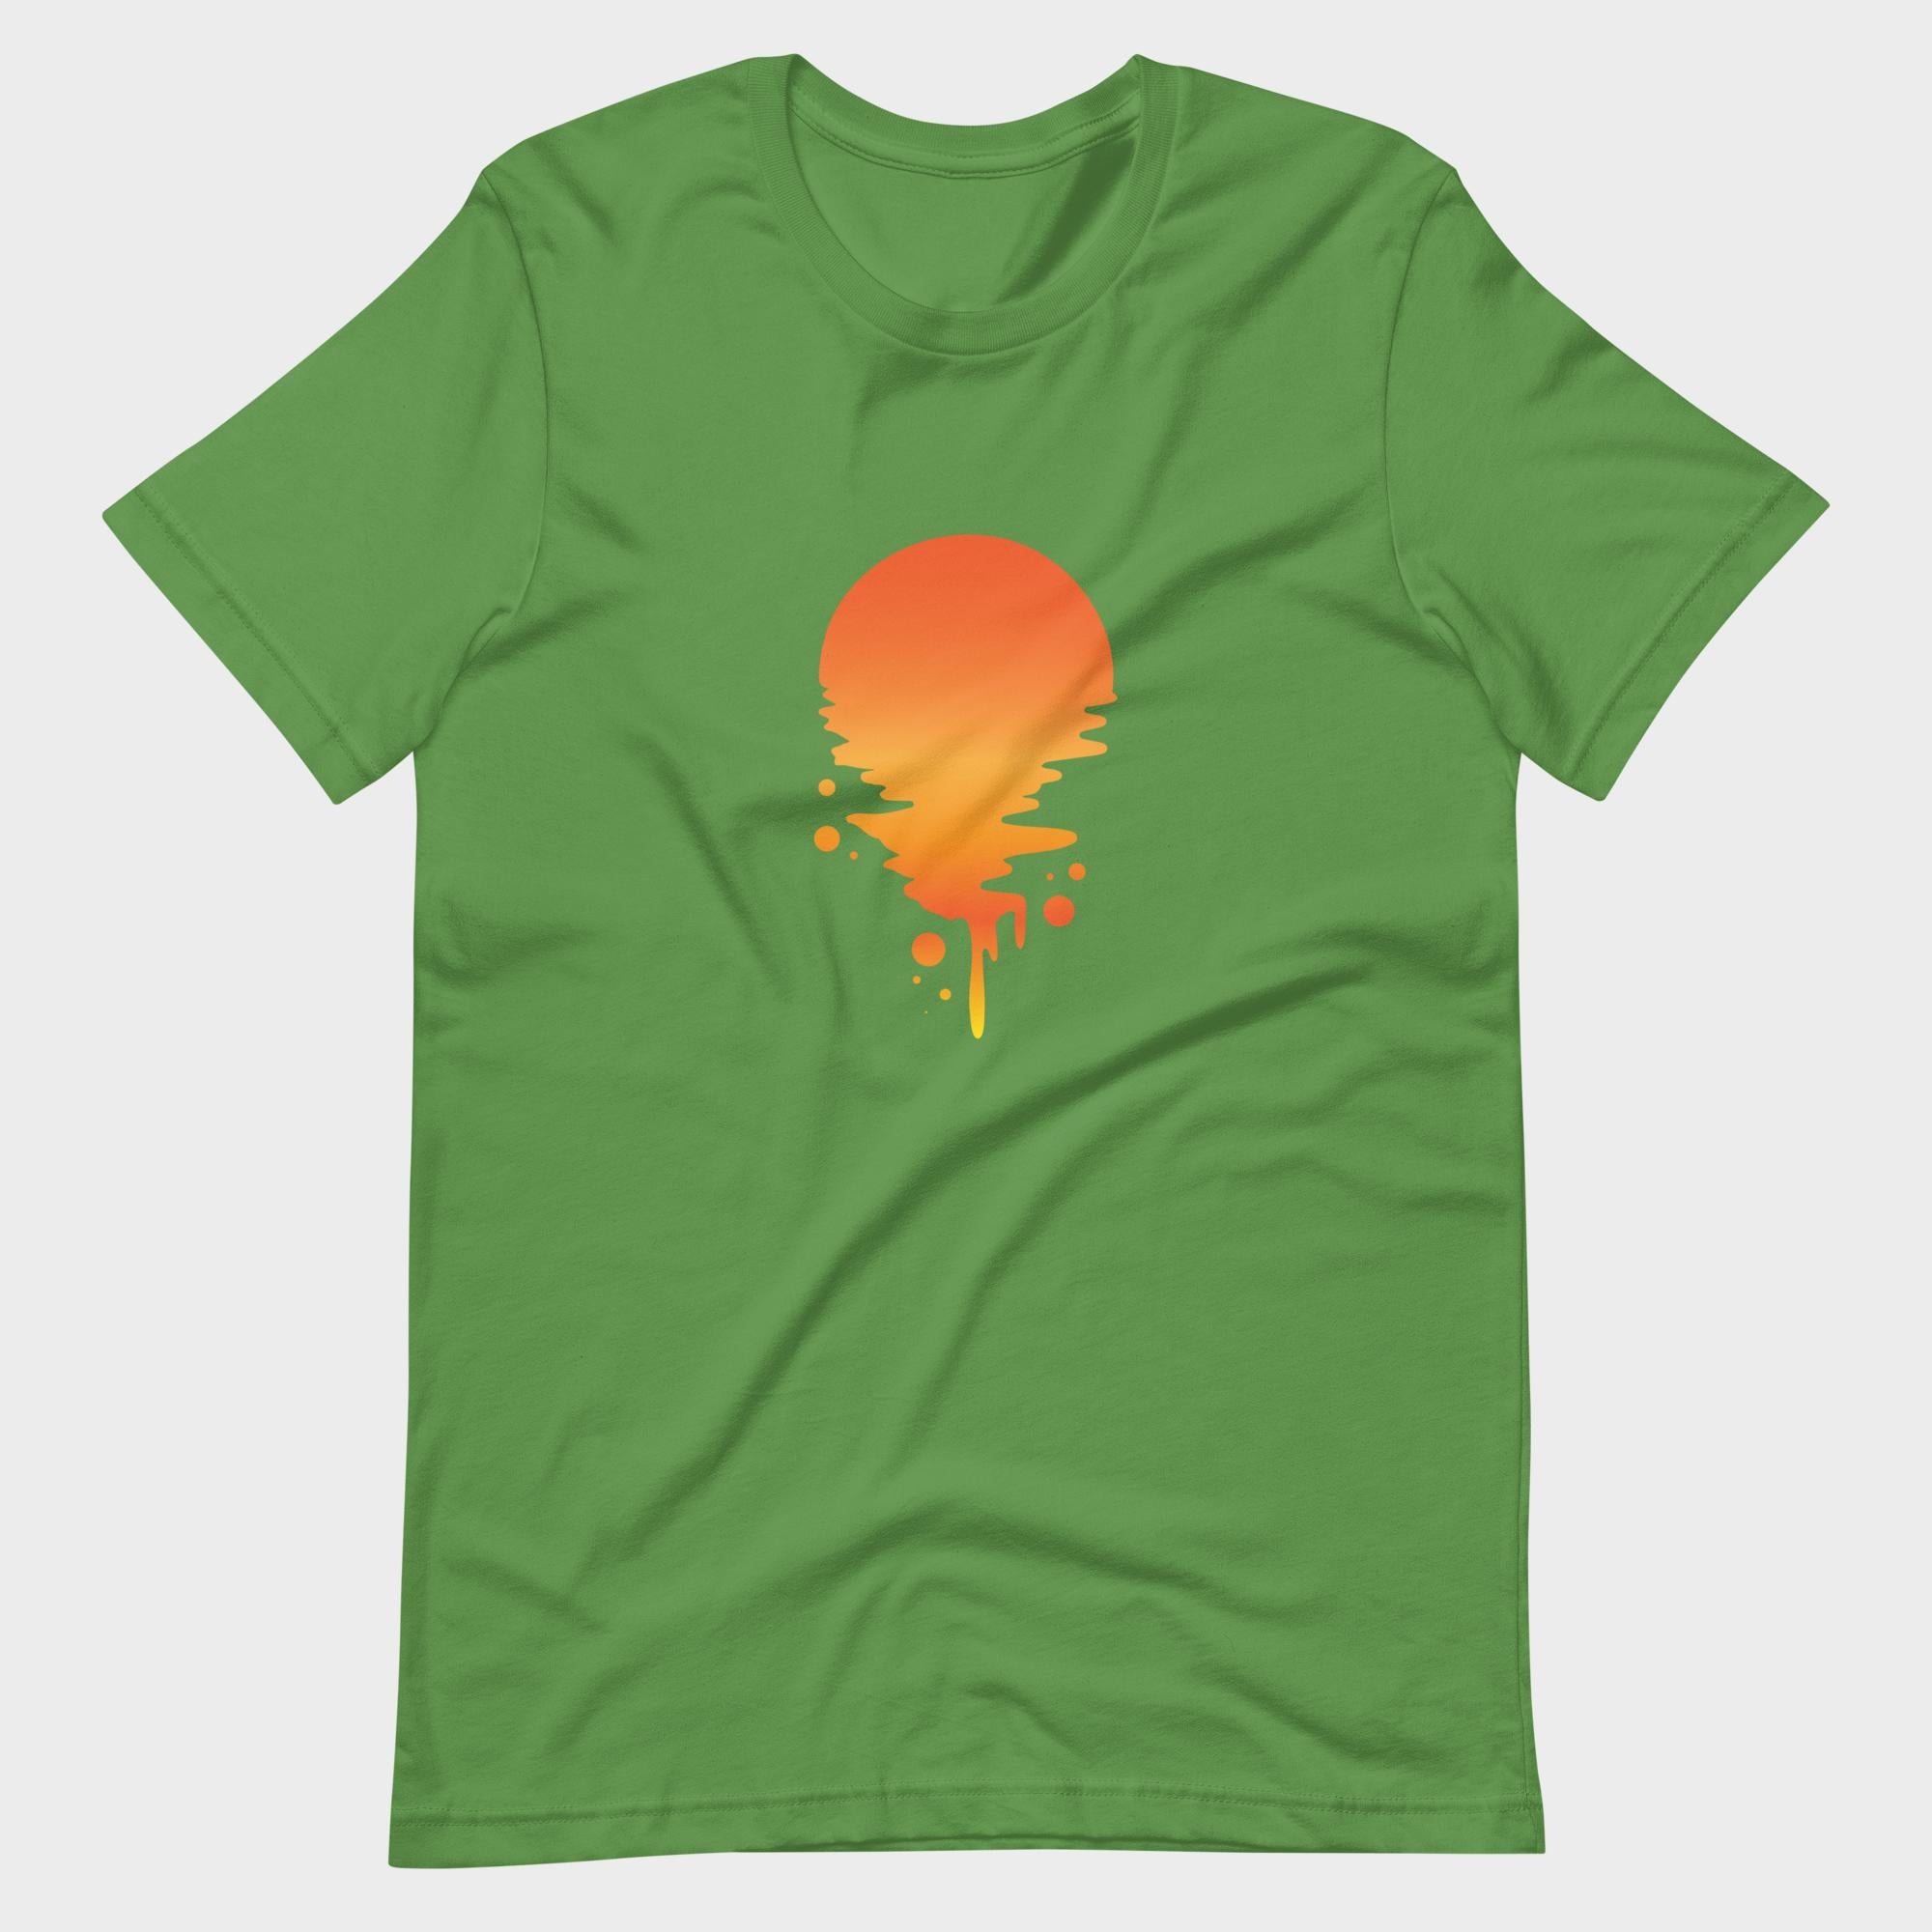 Melted Sunset - T-Shirt